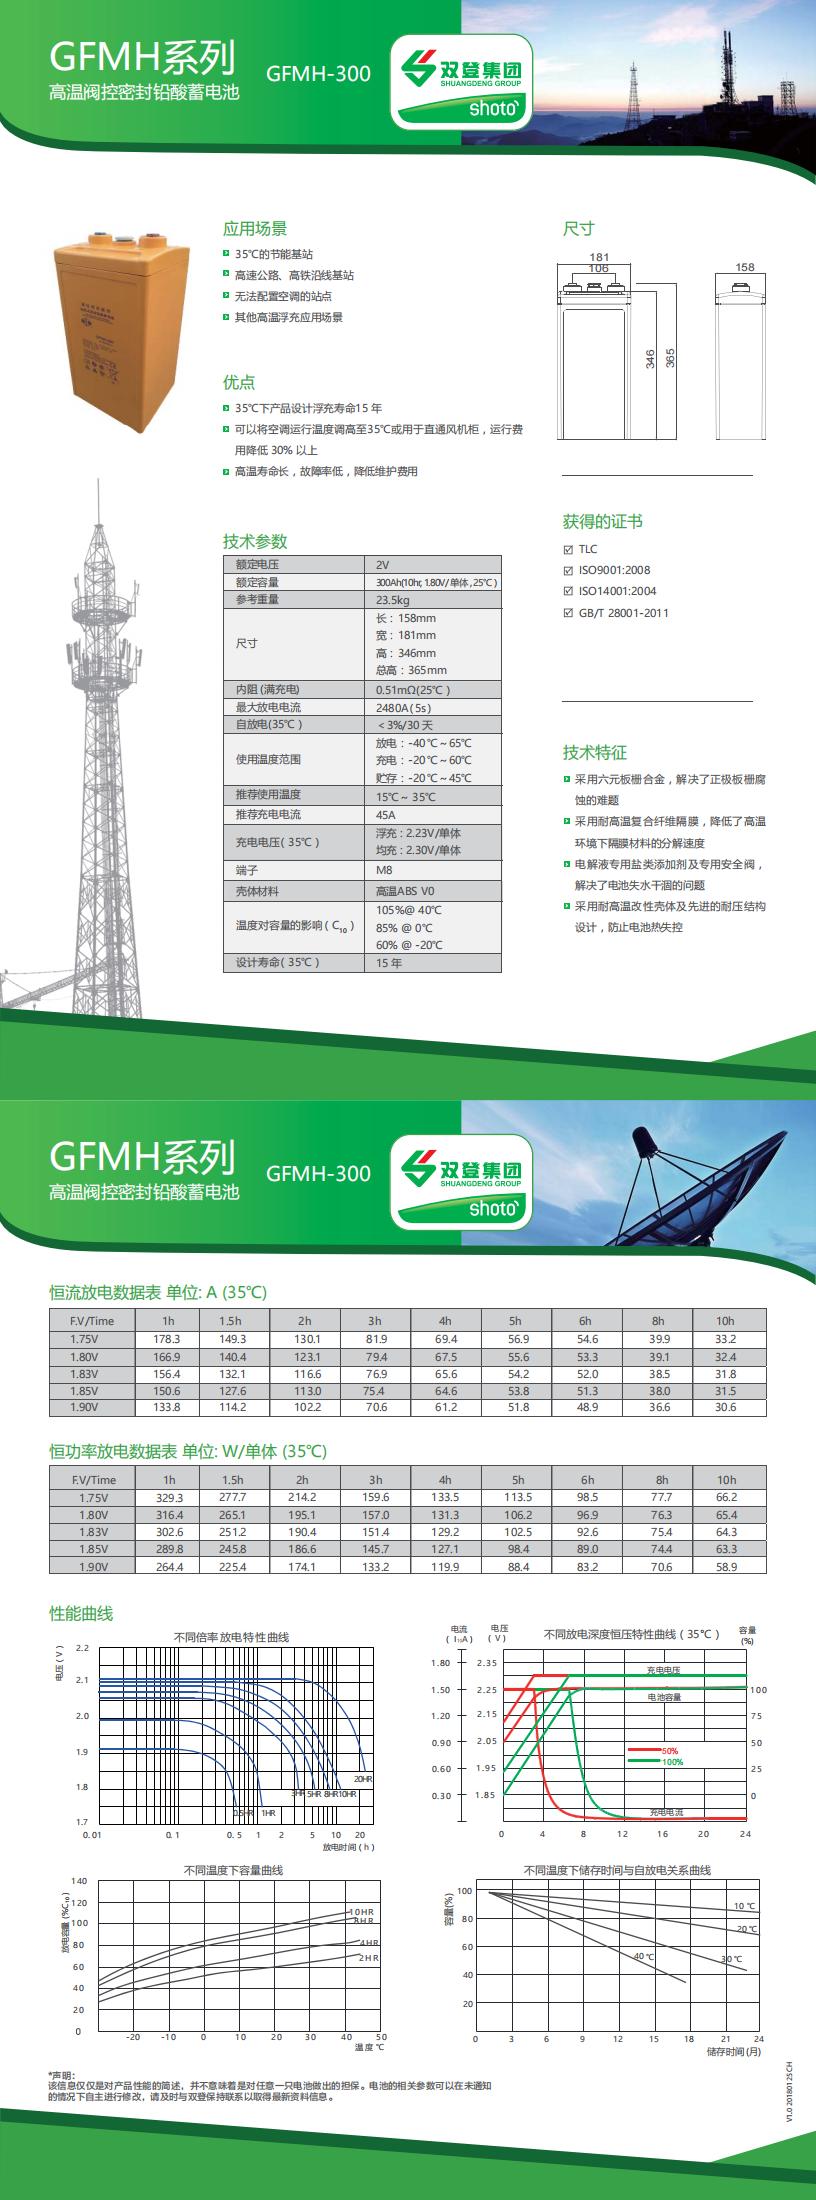 GFMH-300中文_00.jpg